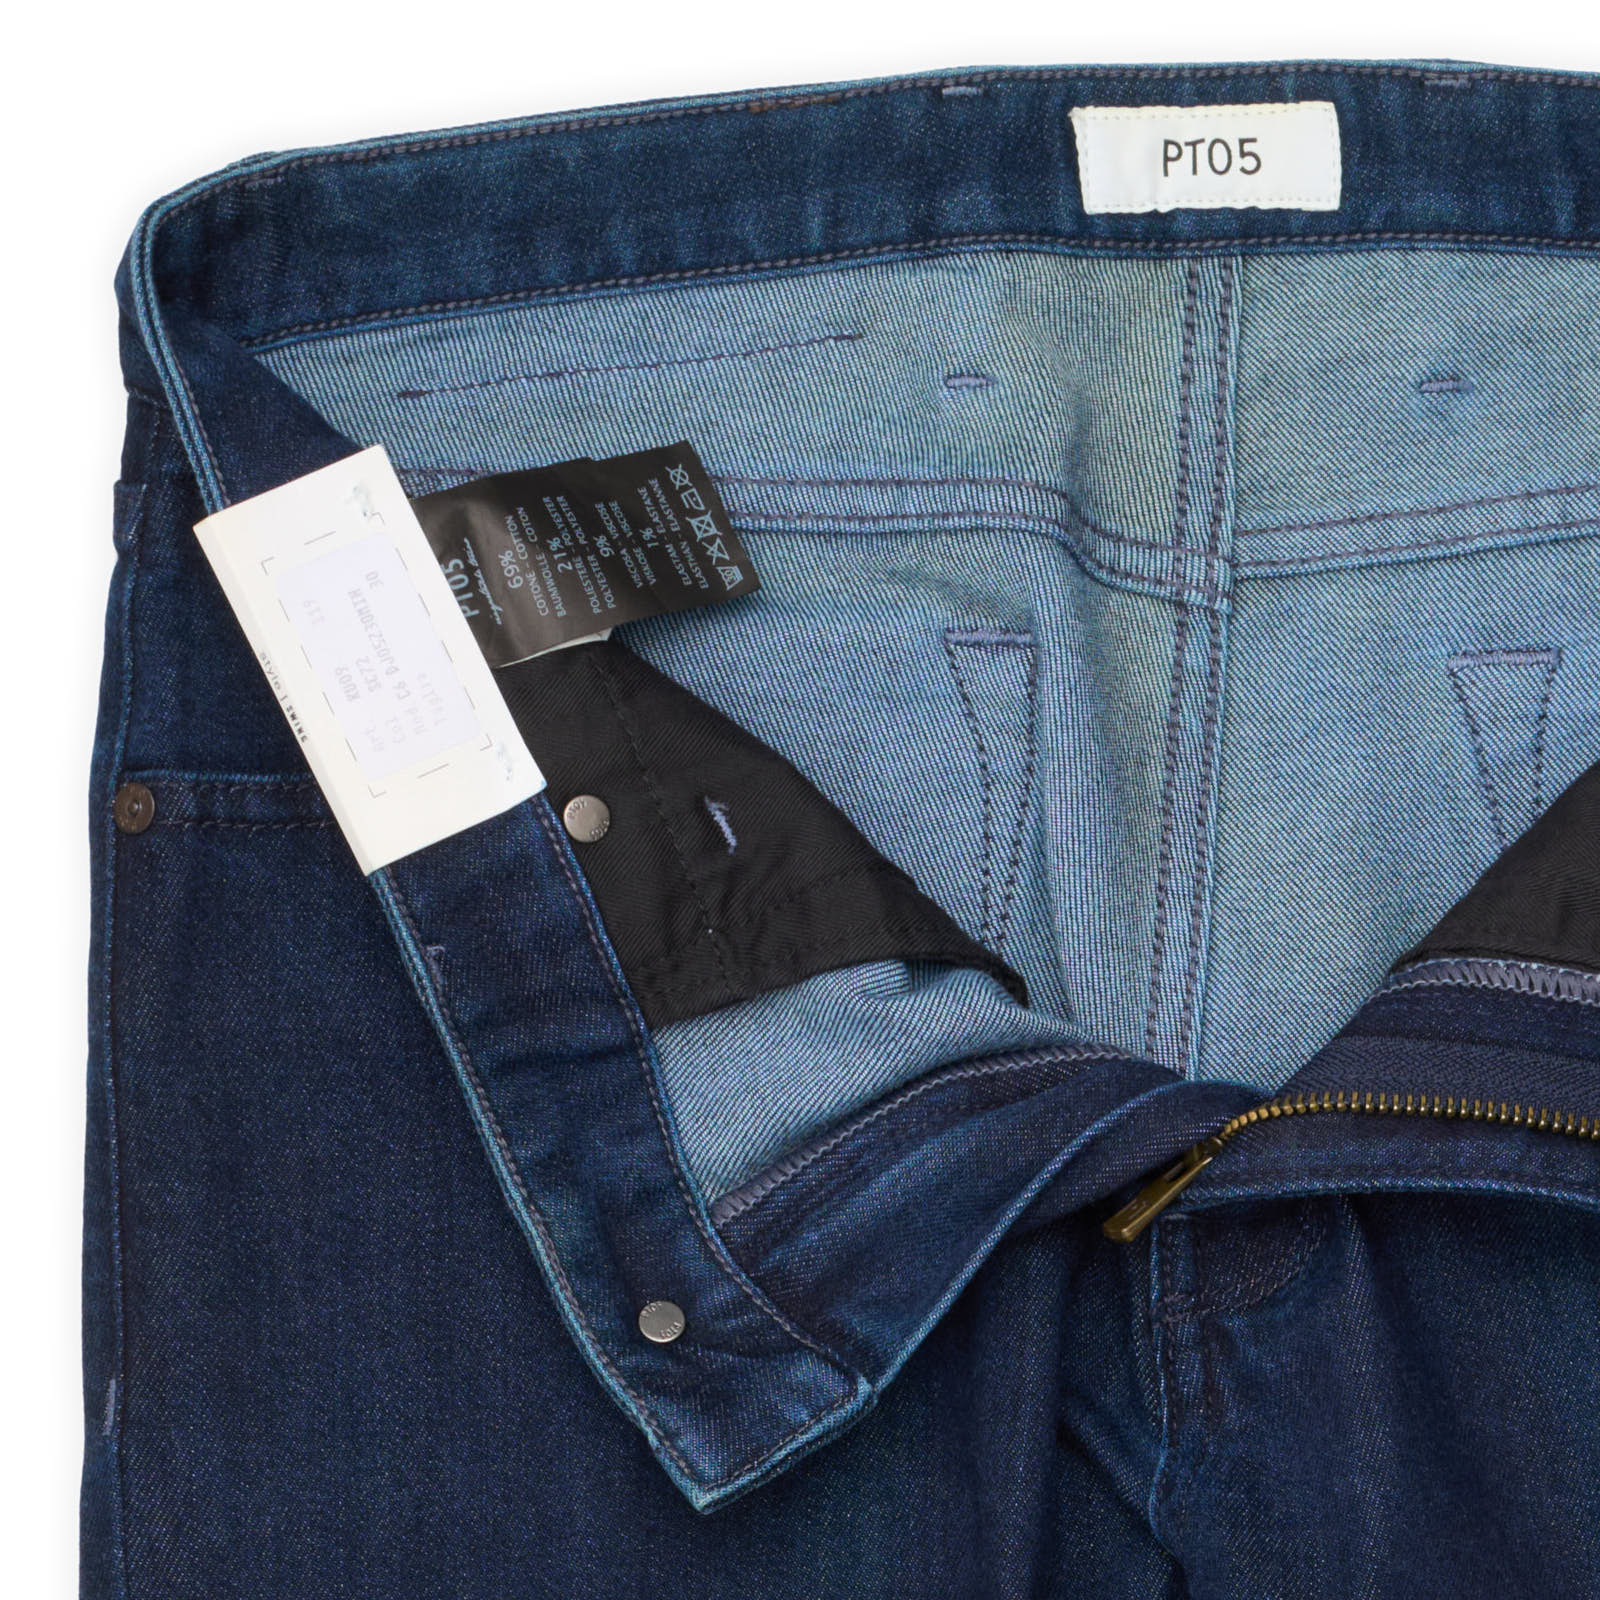 PT05 "Swing" Indigo Blue Cotton-Polyester Stretch Superslim Jeans NEW US 30